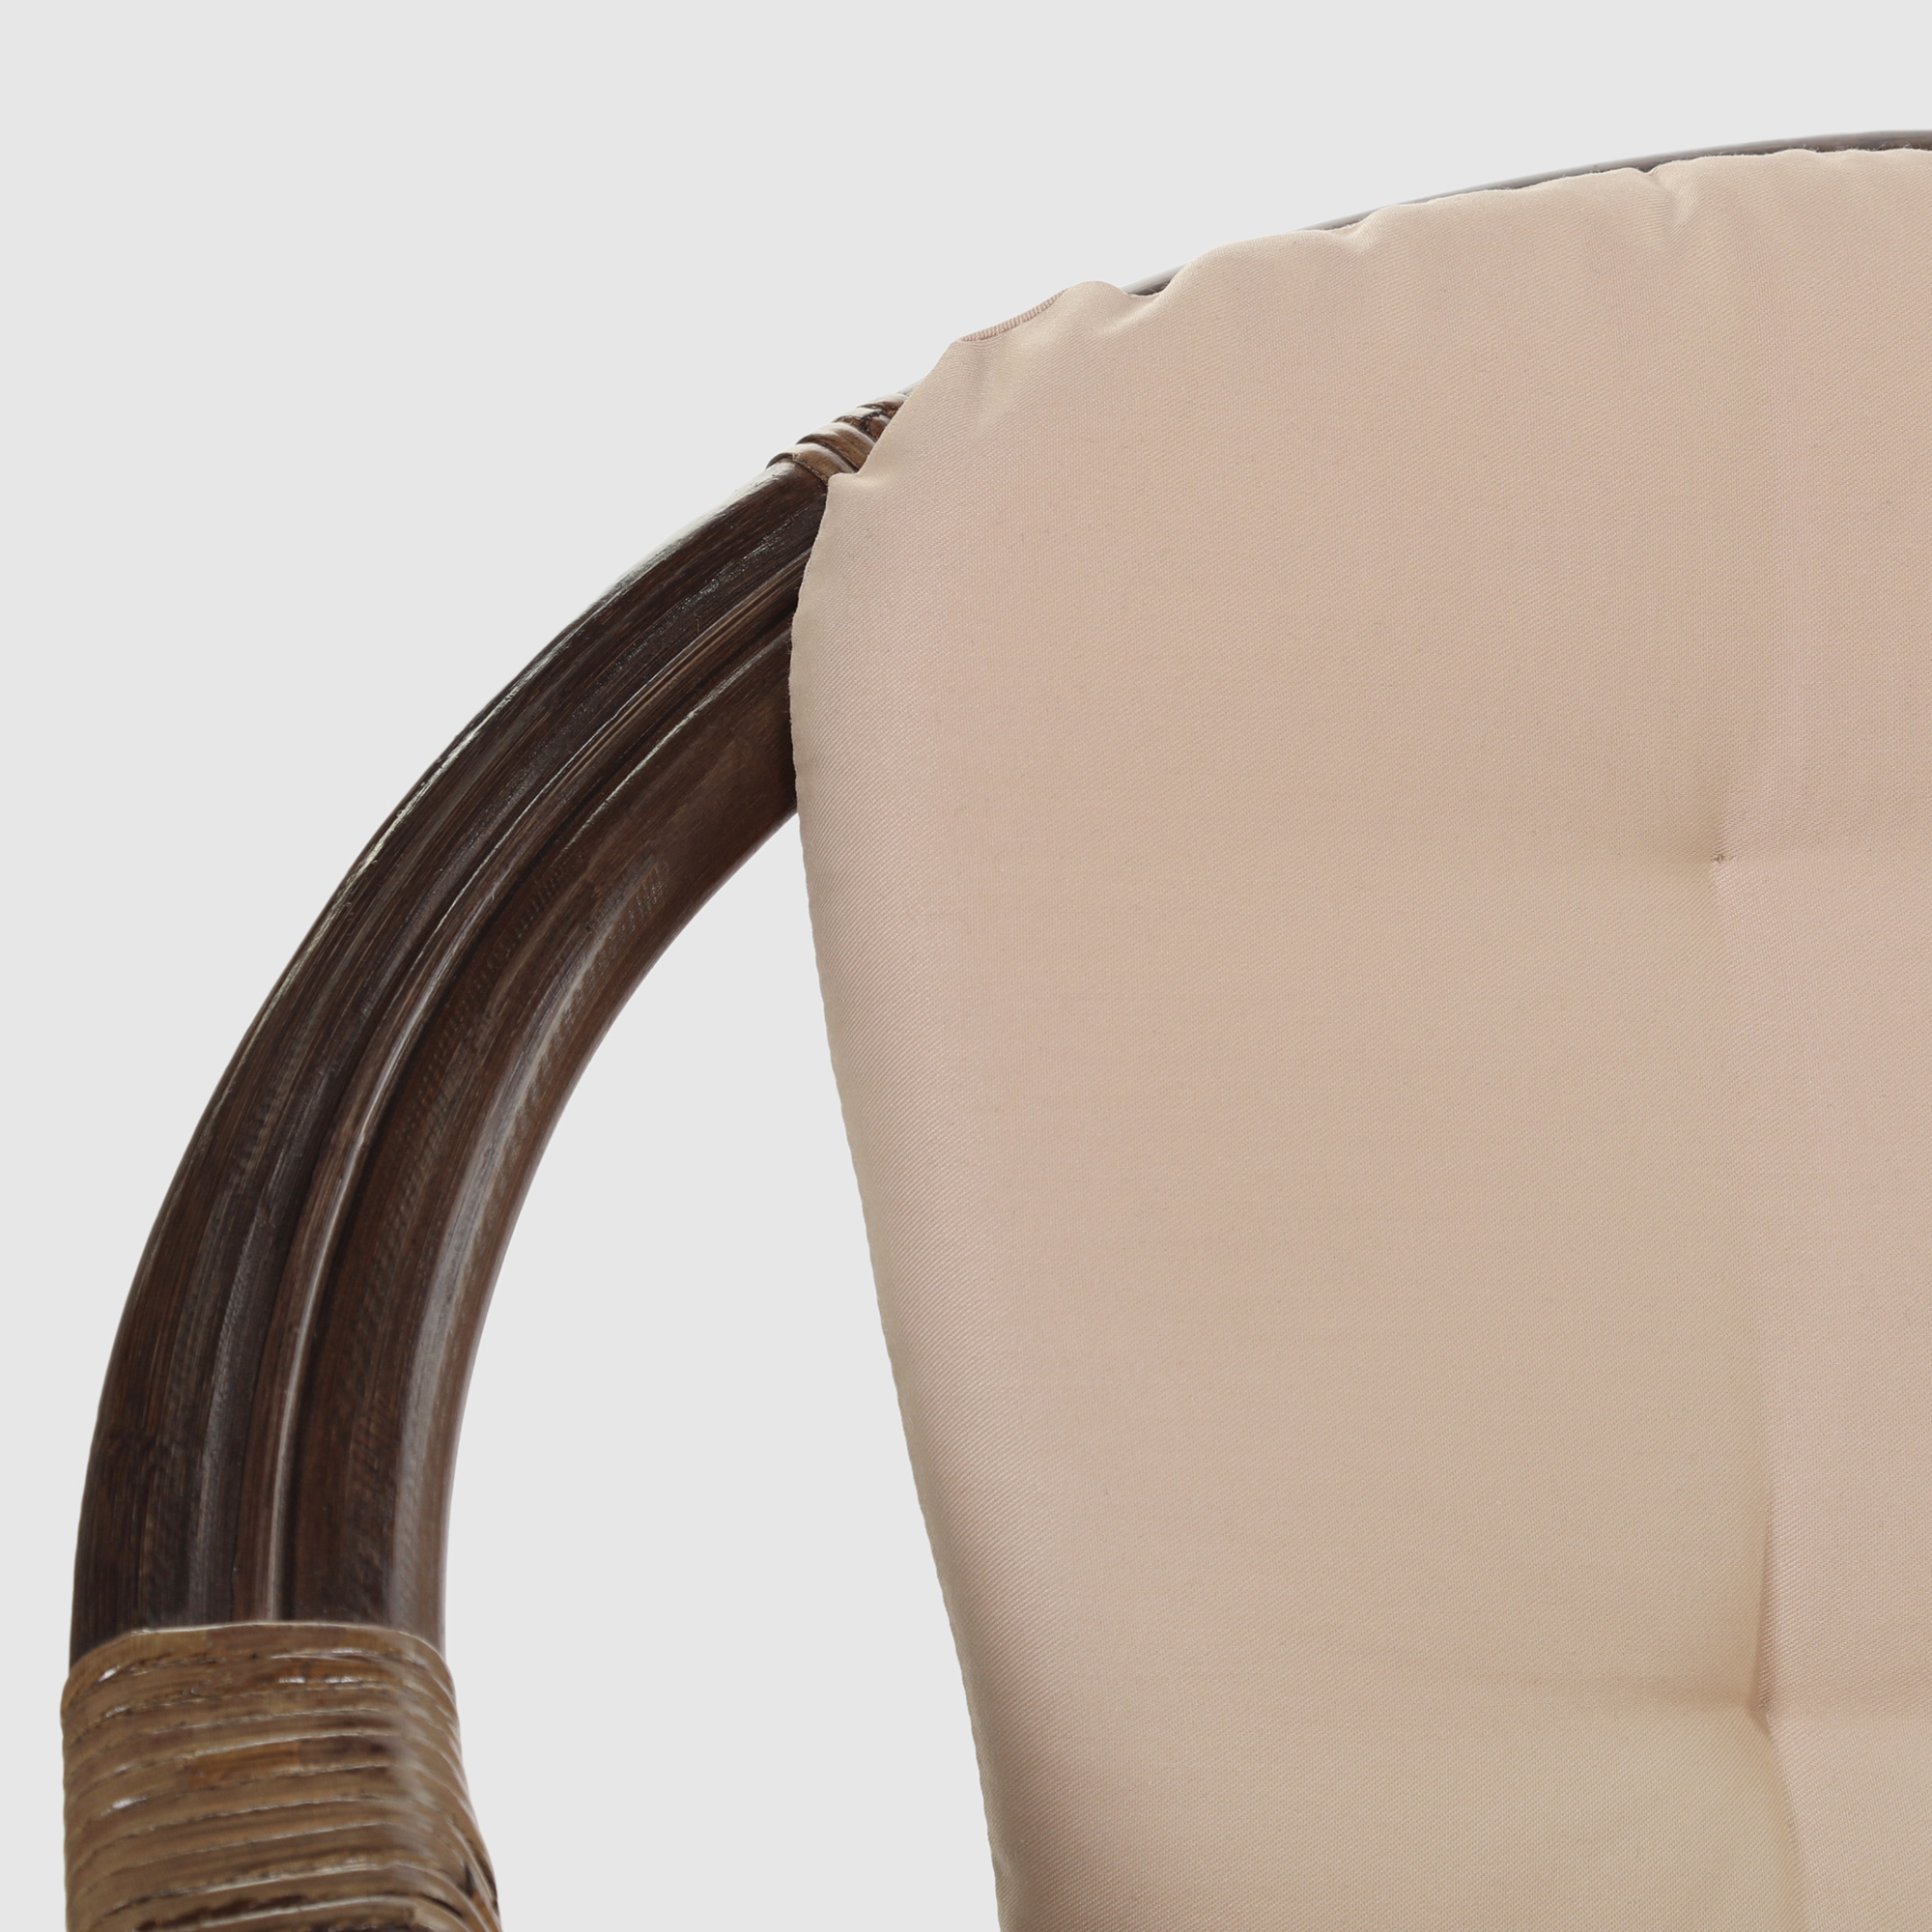 Комплект мебели Rattan grand San Marino medium brown 3 предмета, цвет коричневый, размер 60х67х70 см - фото 10